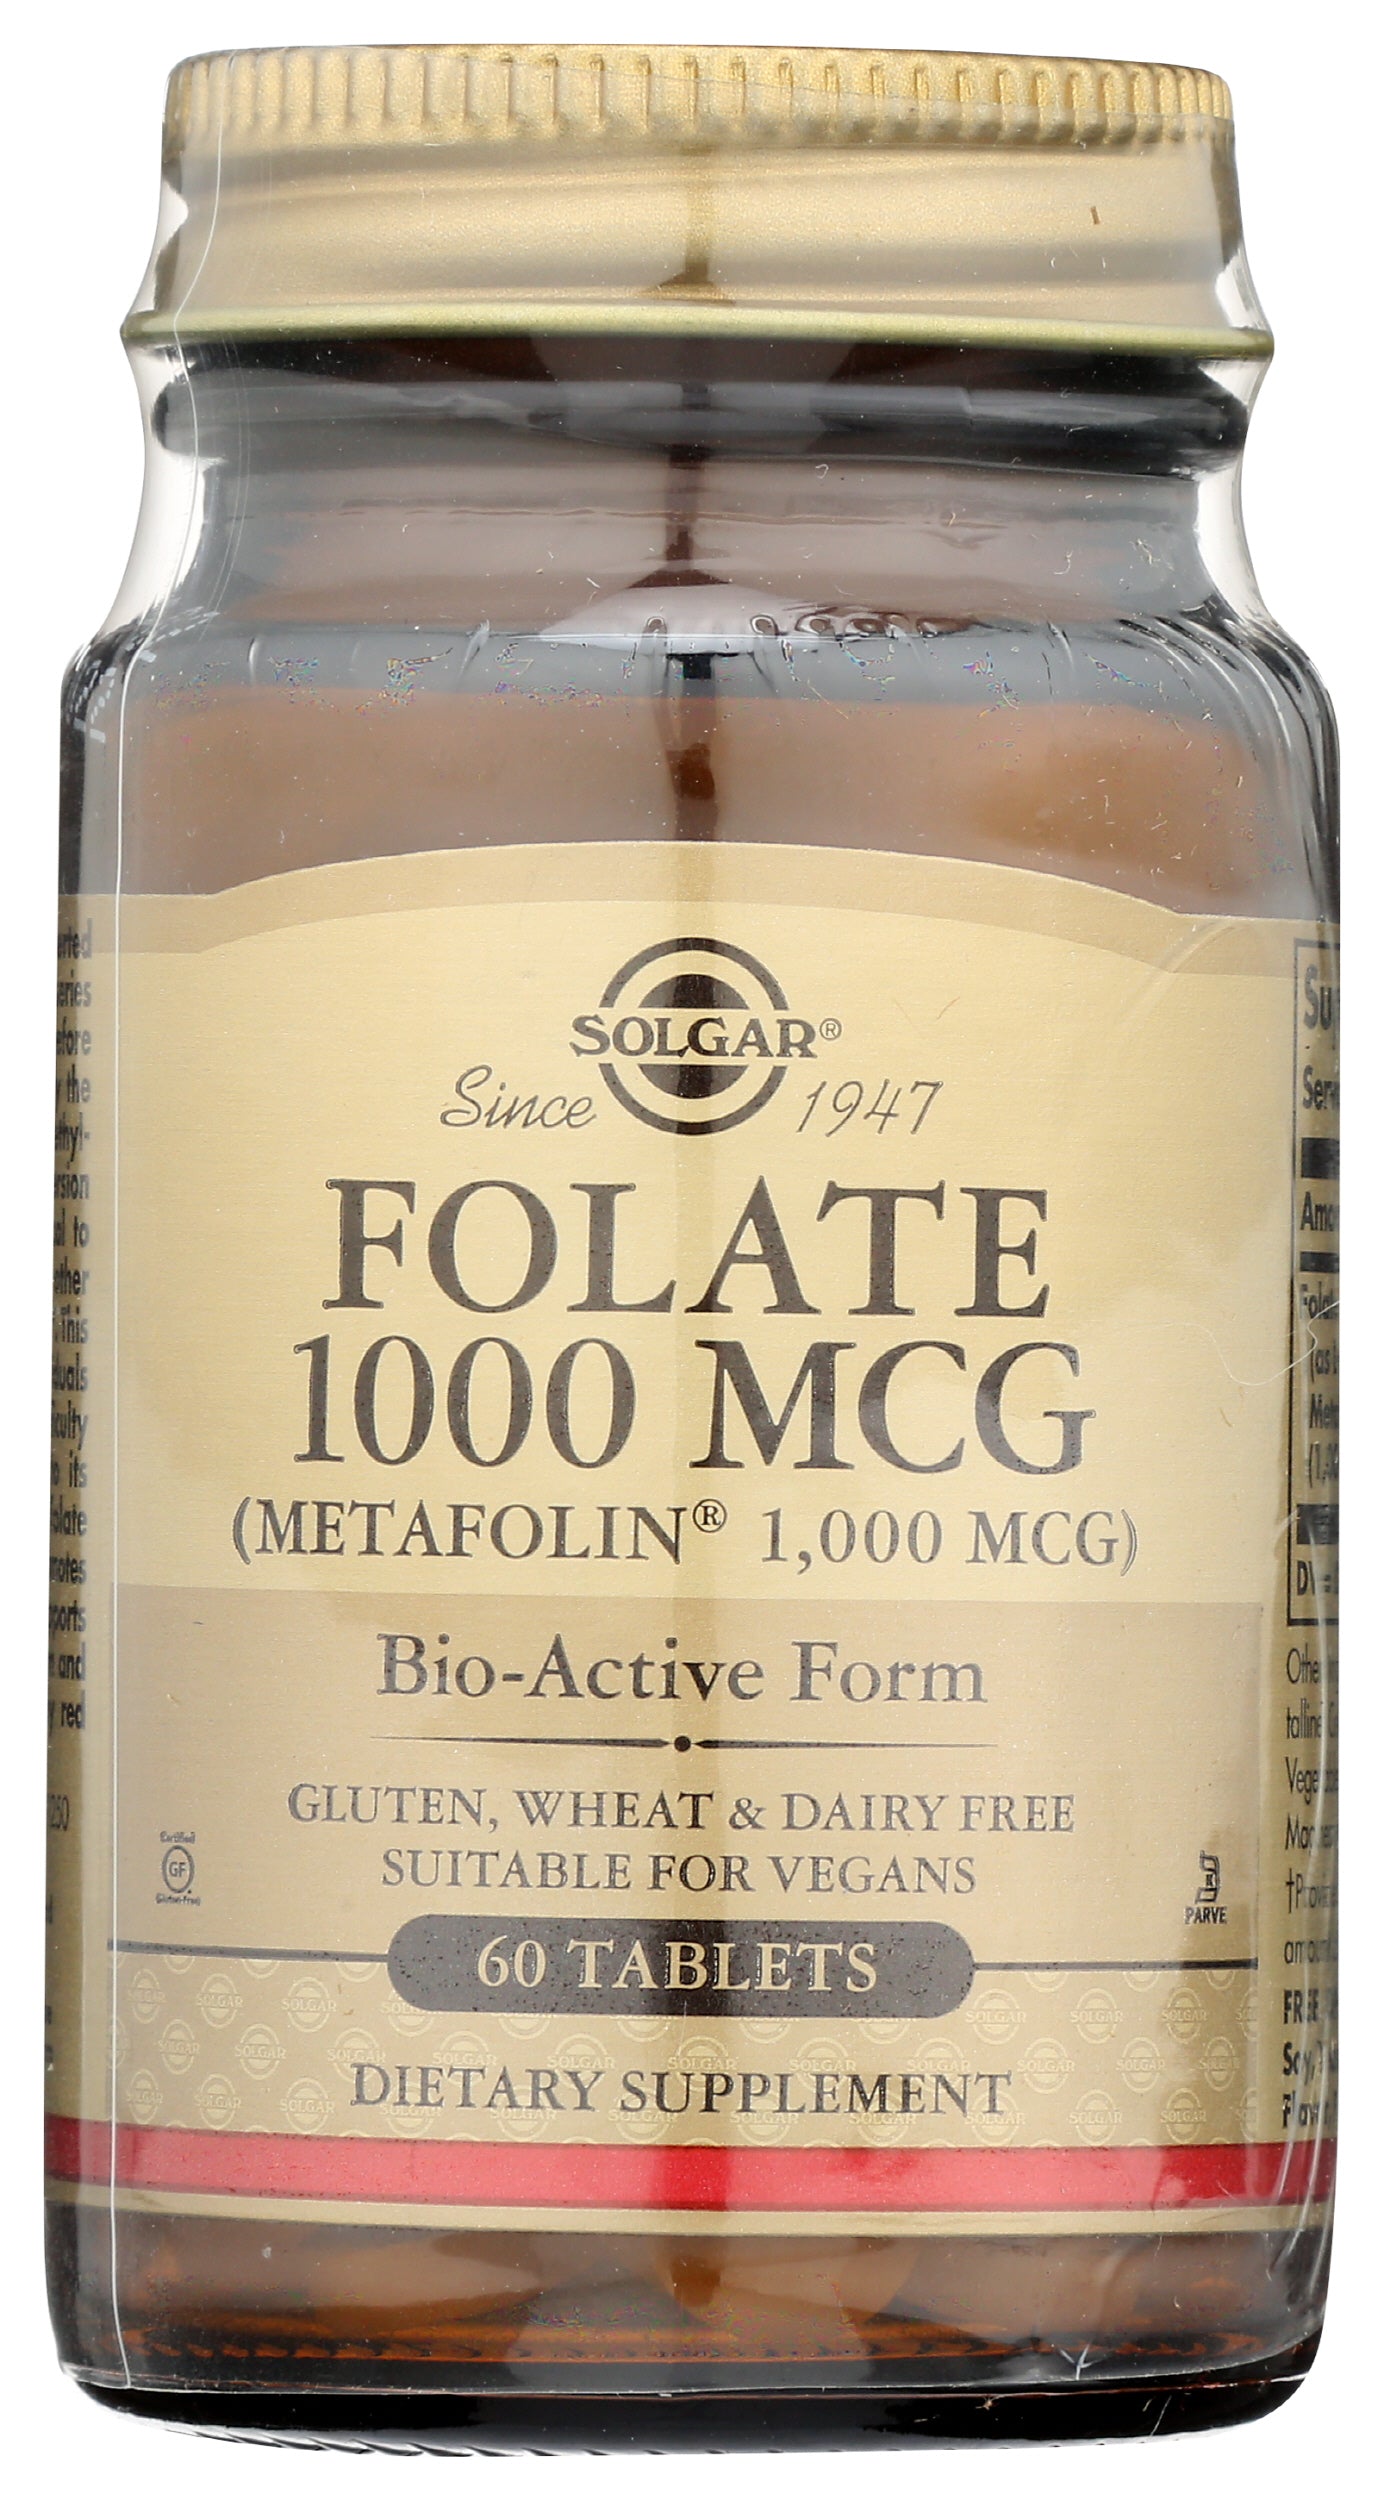 Solgar Folate 1000 mcg (Metafolin 1,000 mcg) 60 Tablets Front of Bottle